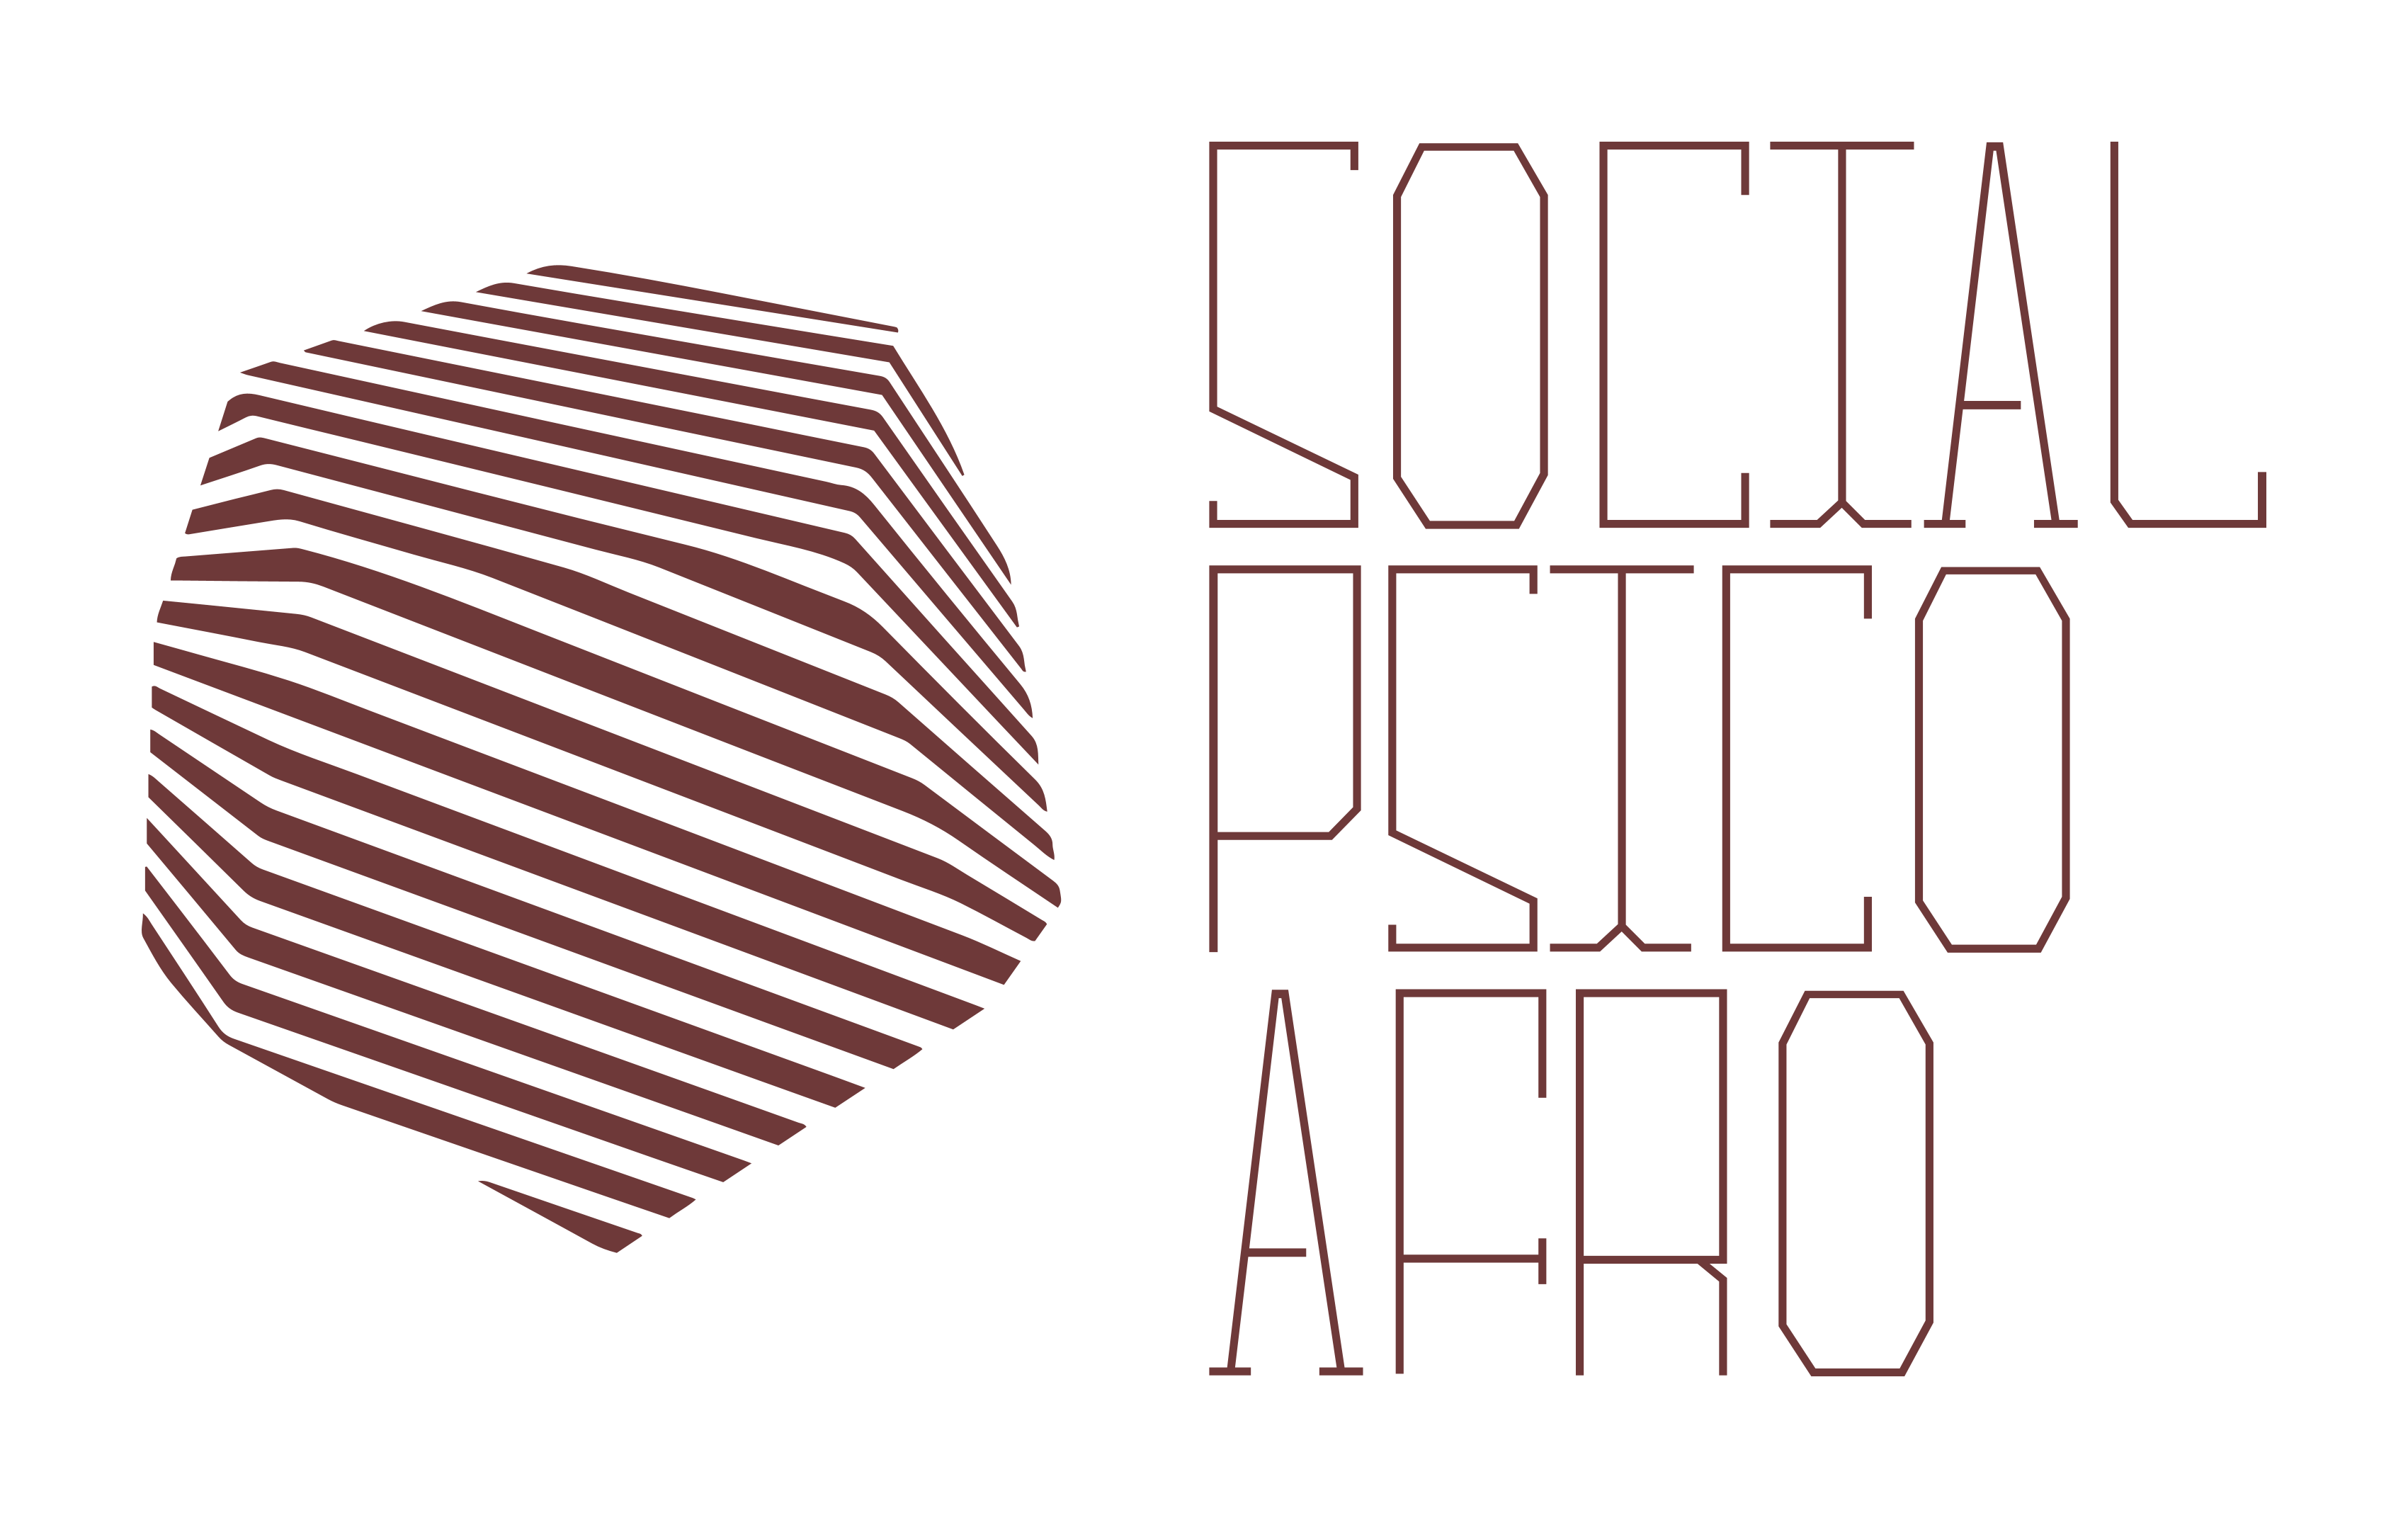 Social Psico Afro Logo